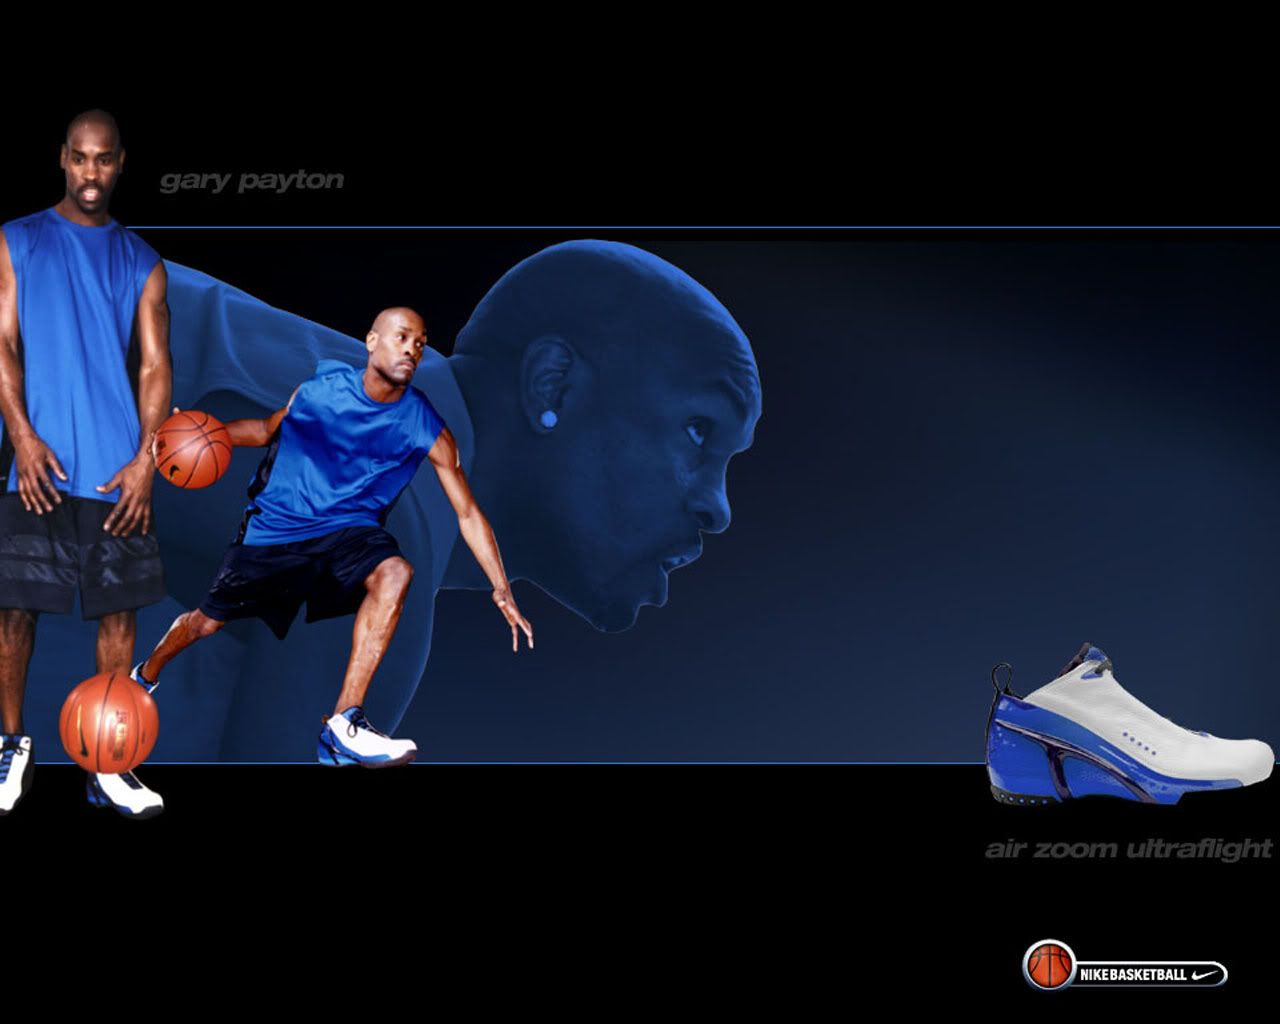 nike basketball Desktop Background